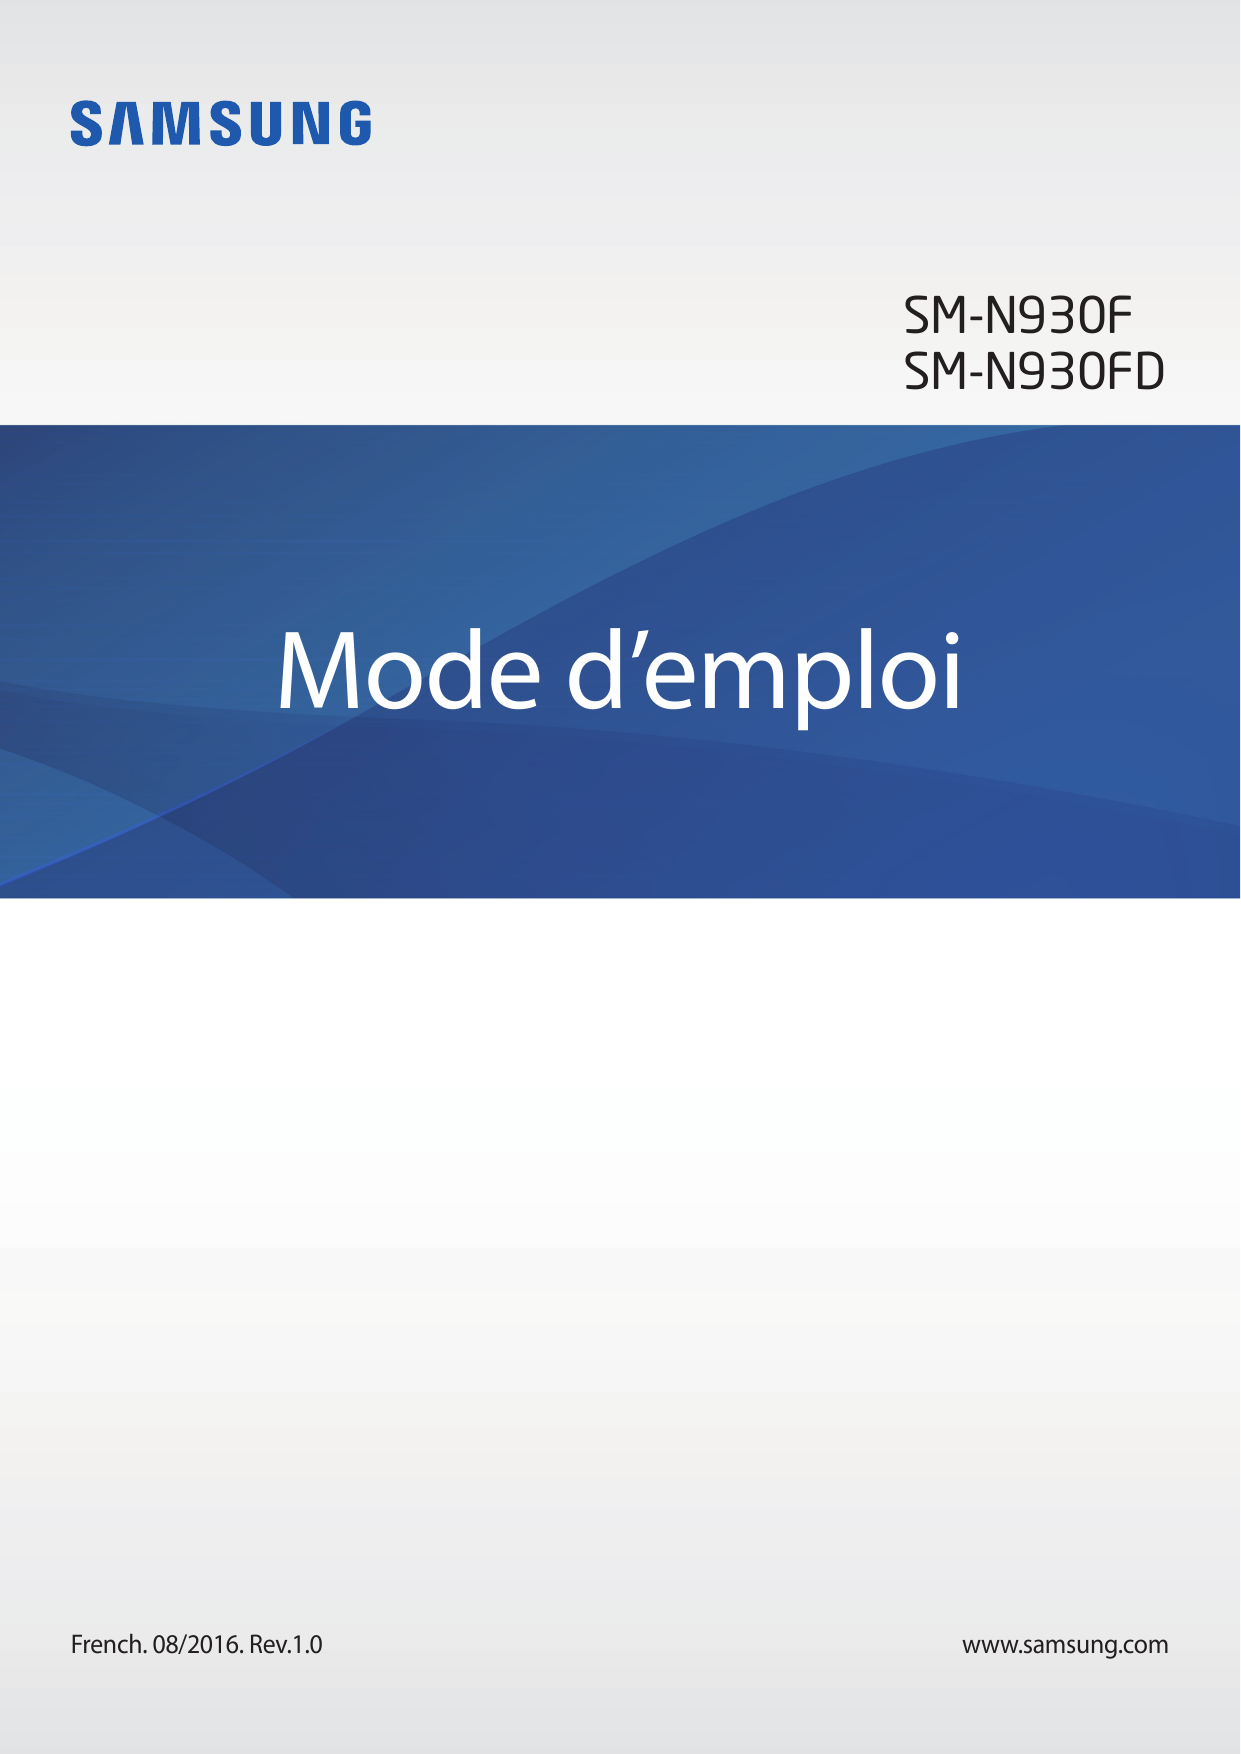 SM-N930FSM-N930FDMode d’emploiFrench. 08/2016. Rev.1.0www.samsung.com